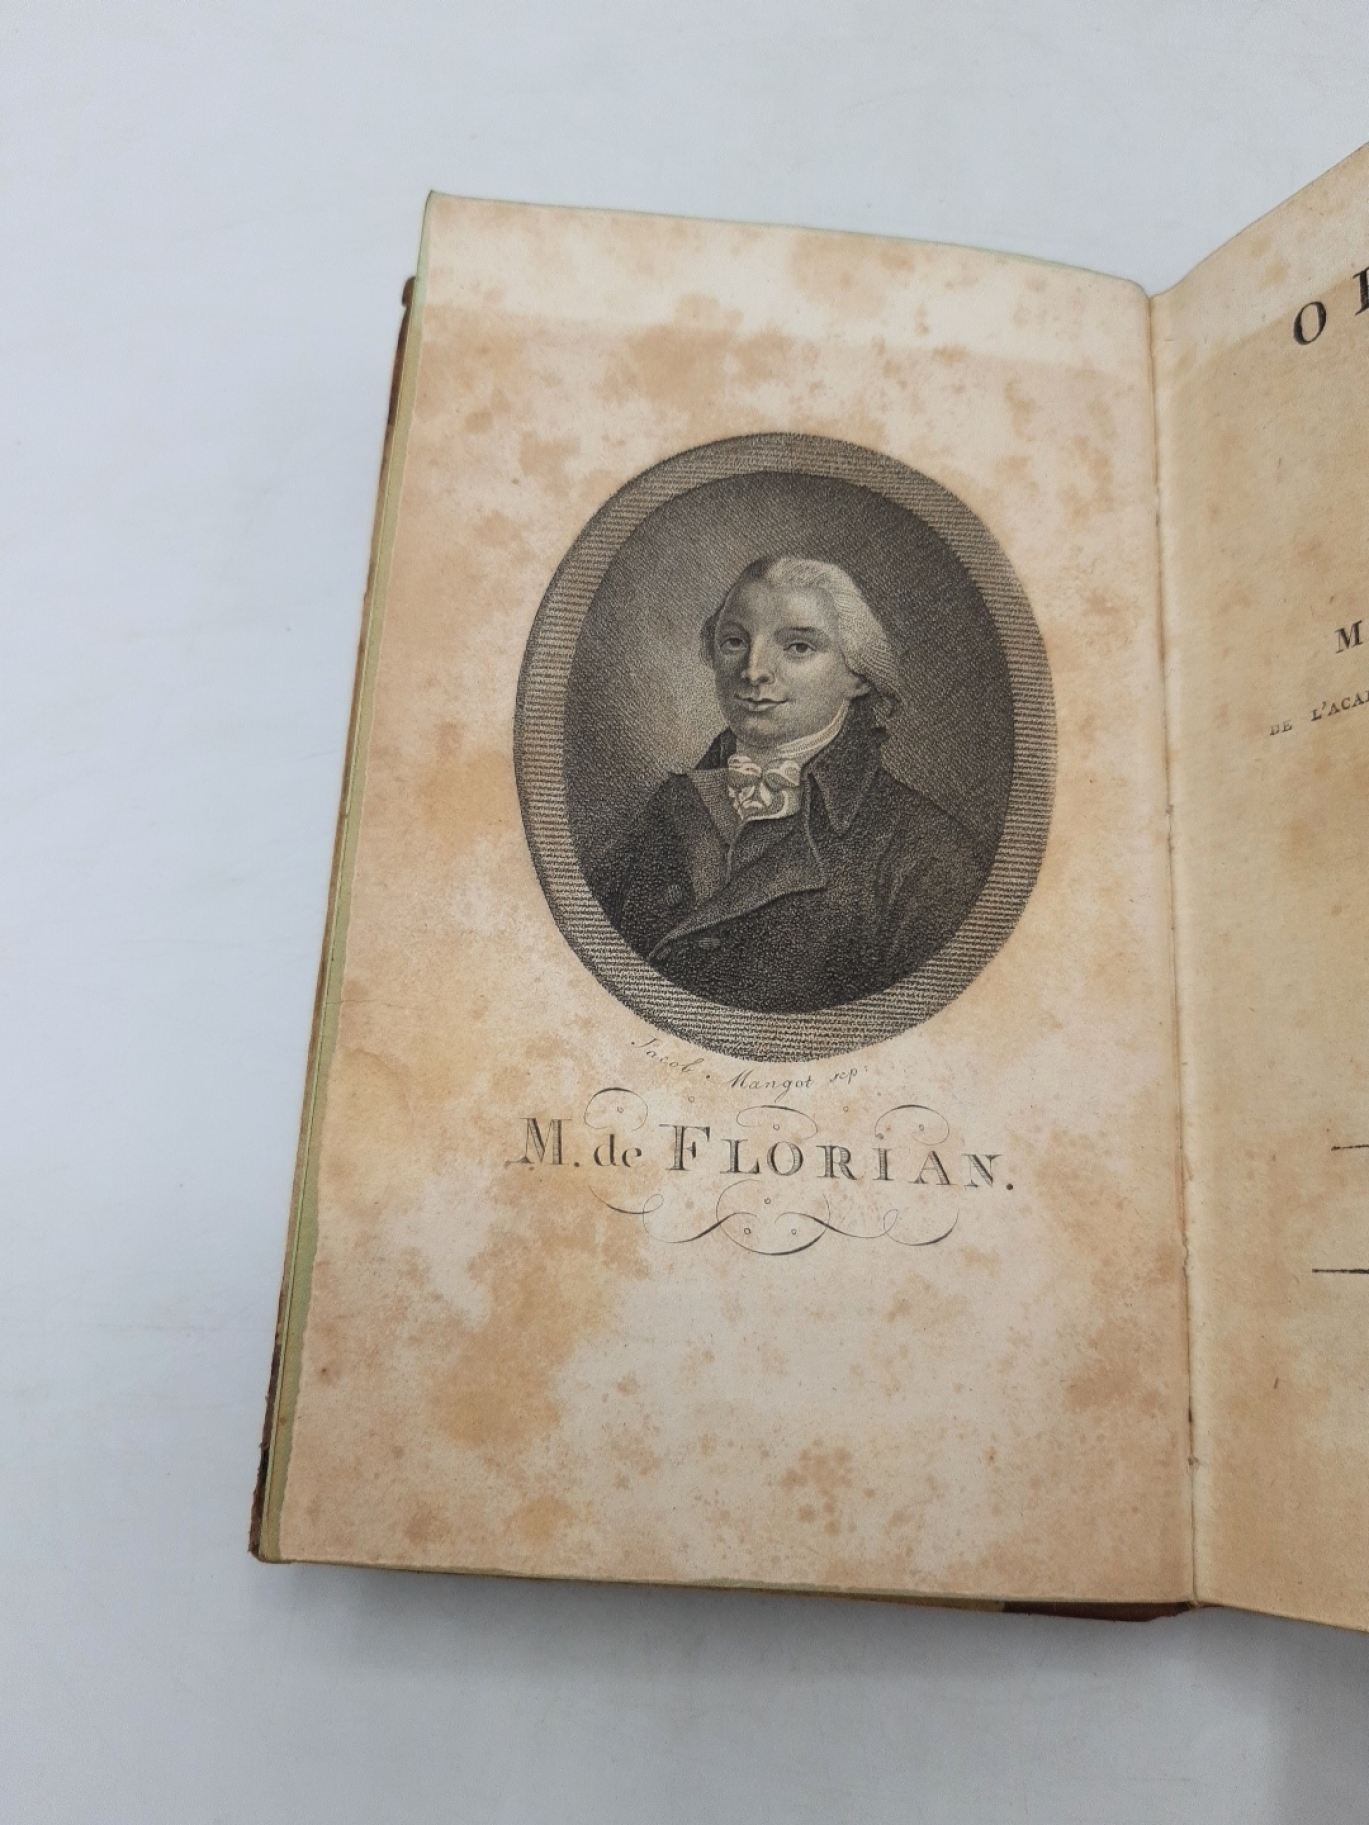 Florian, Jean Pierre Claris de: Oeuvres completes de M. de Florian.